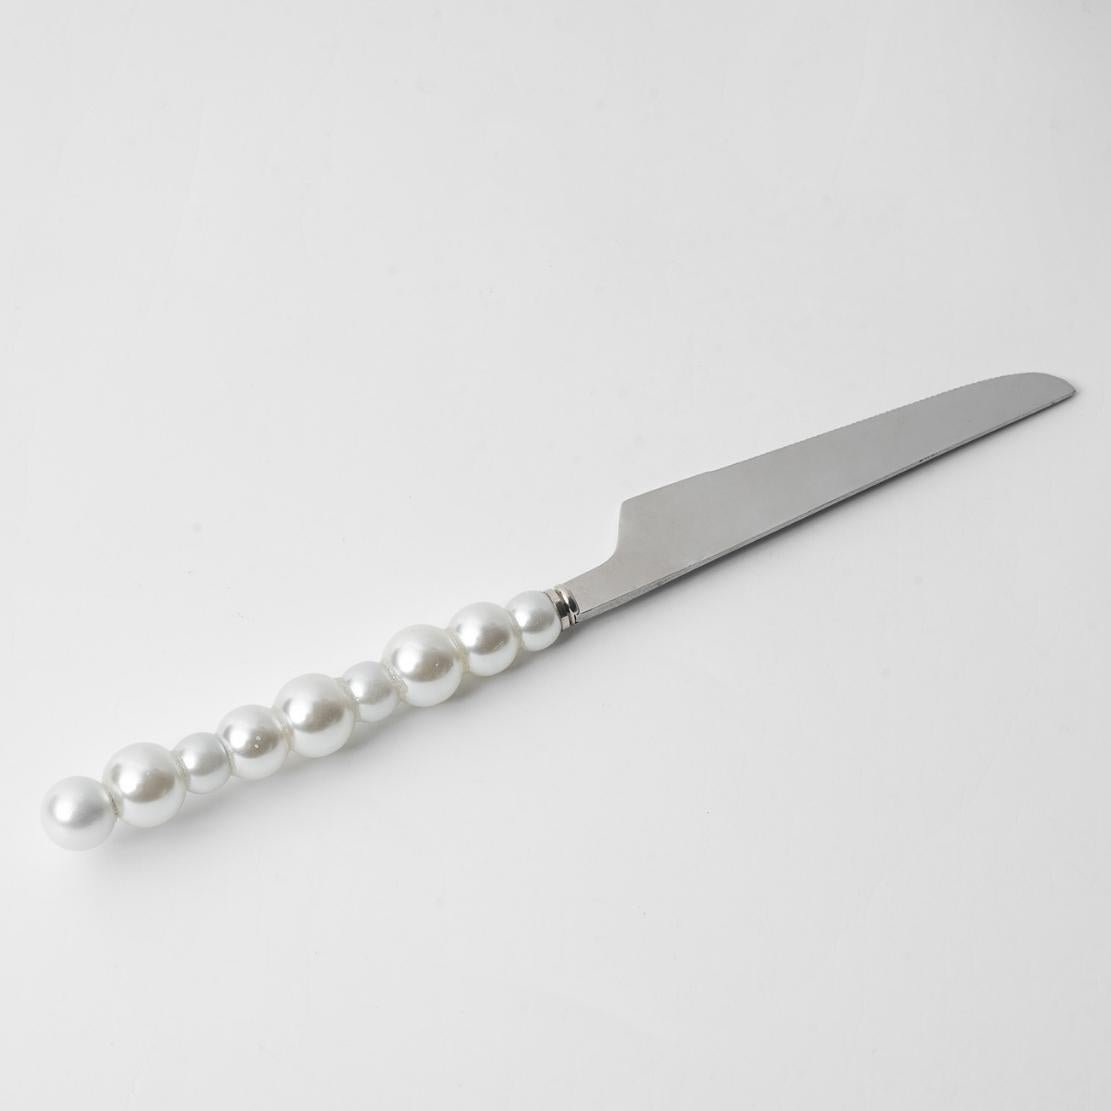 White pearl silver tableware knife